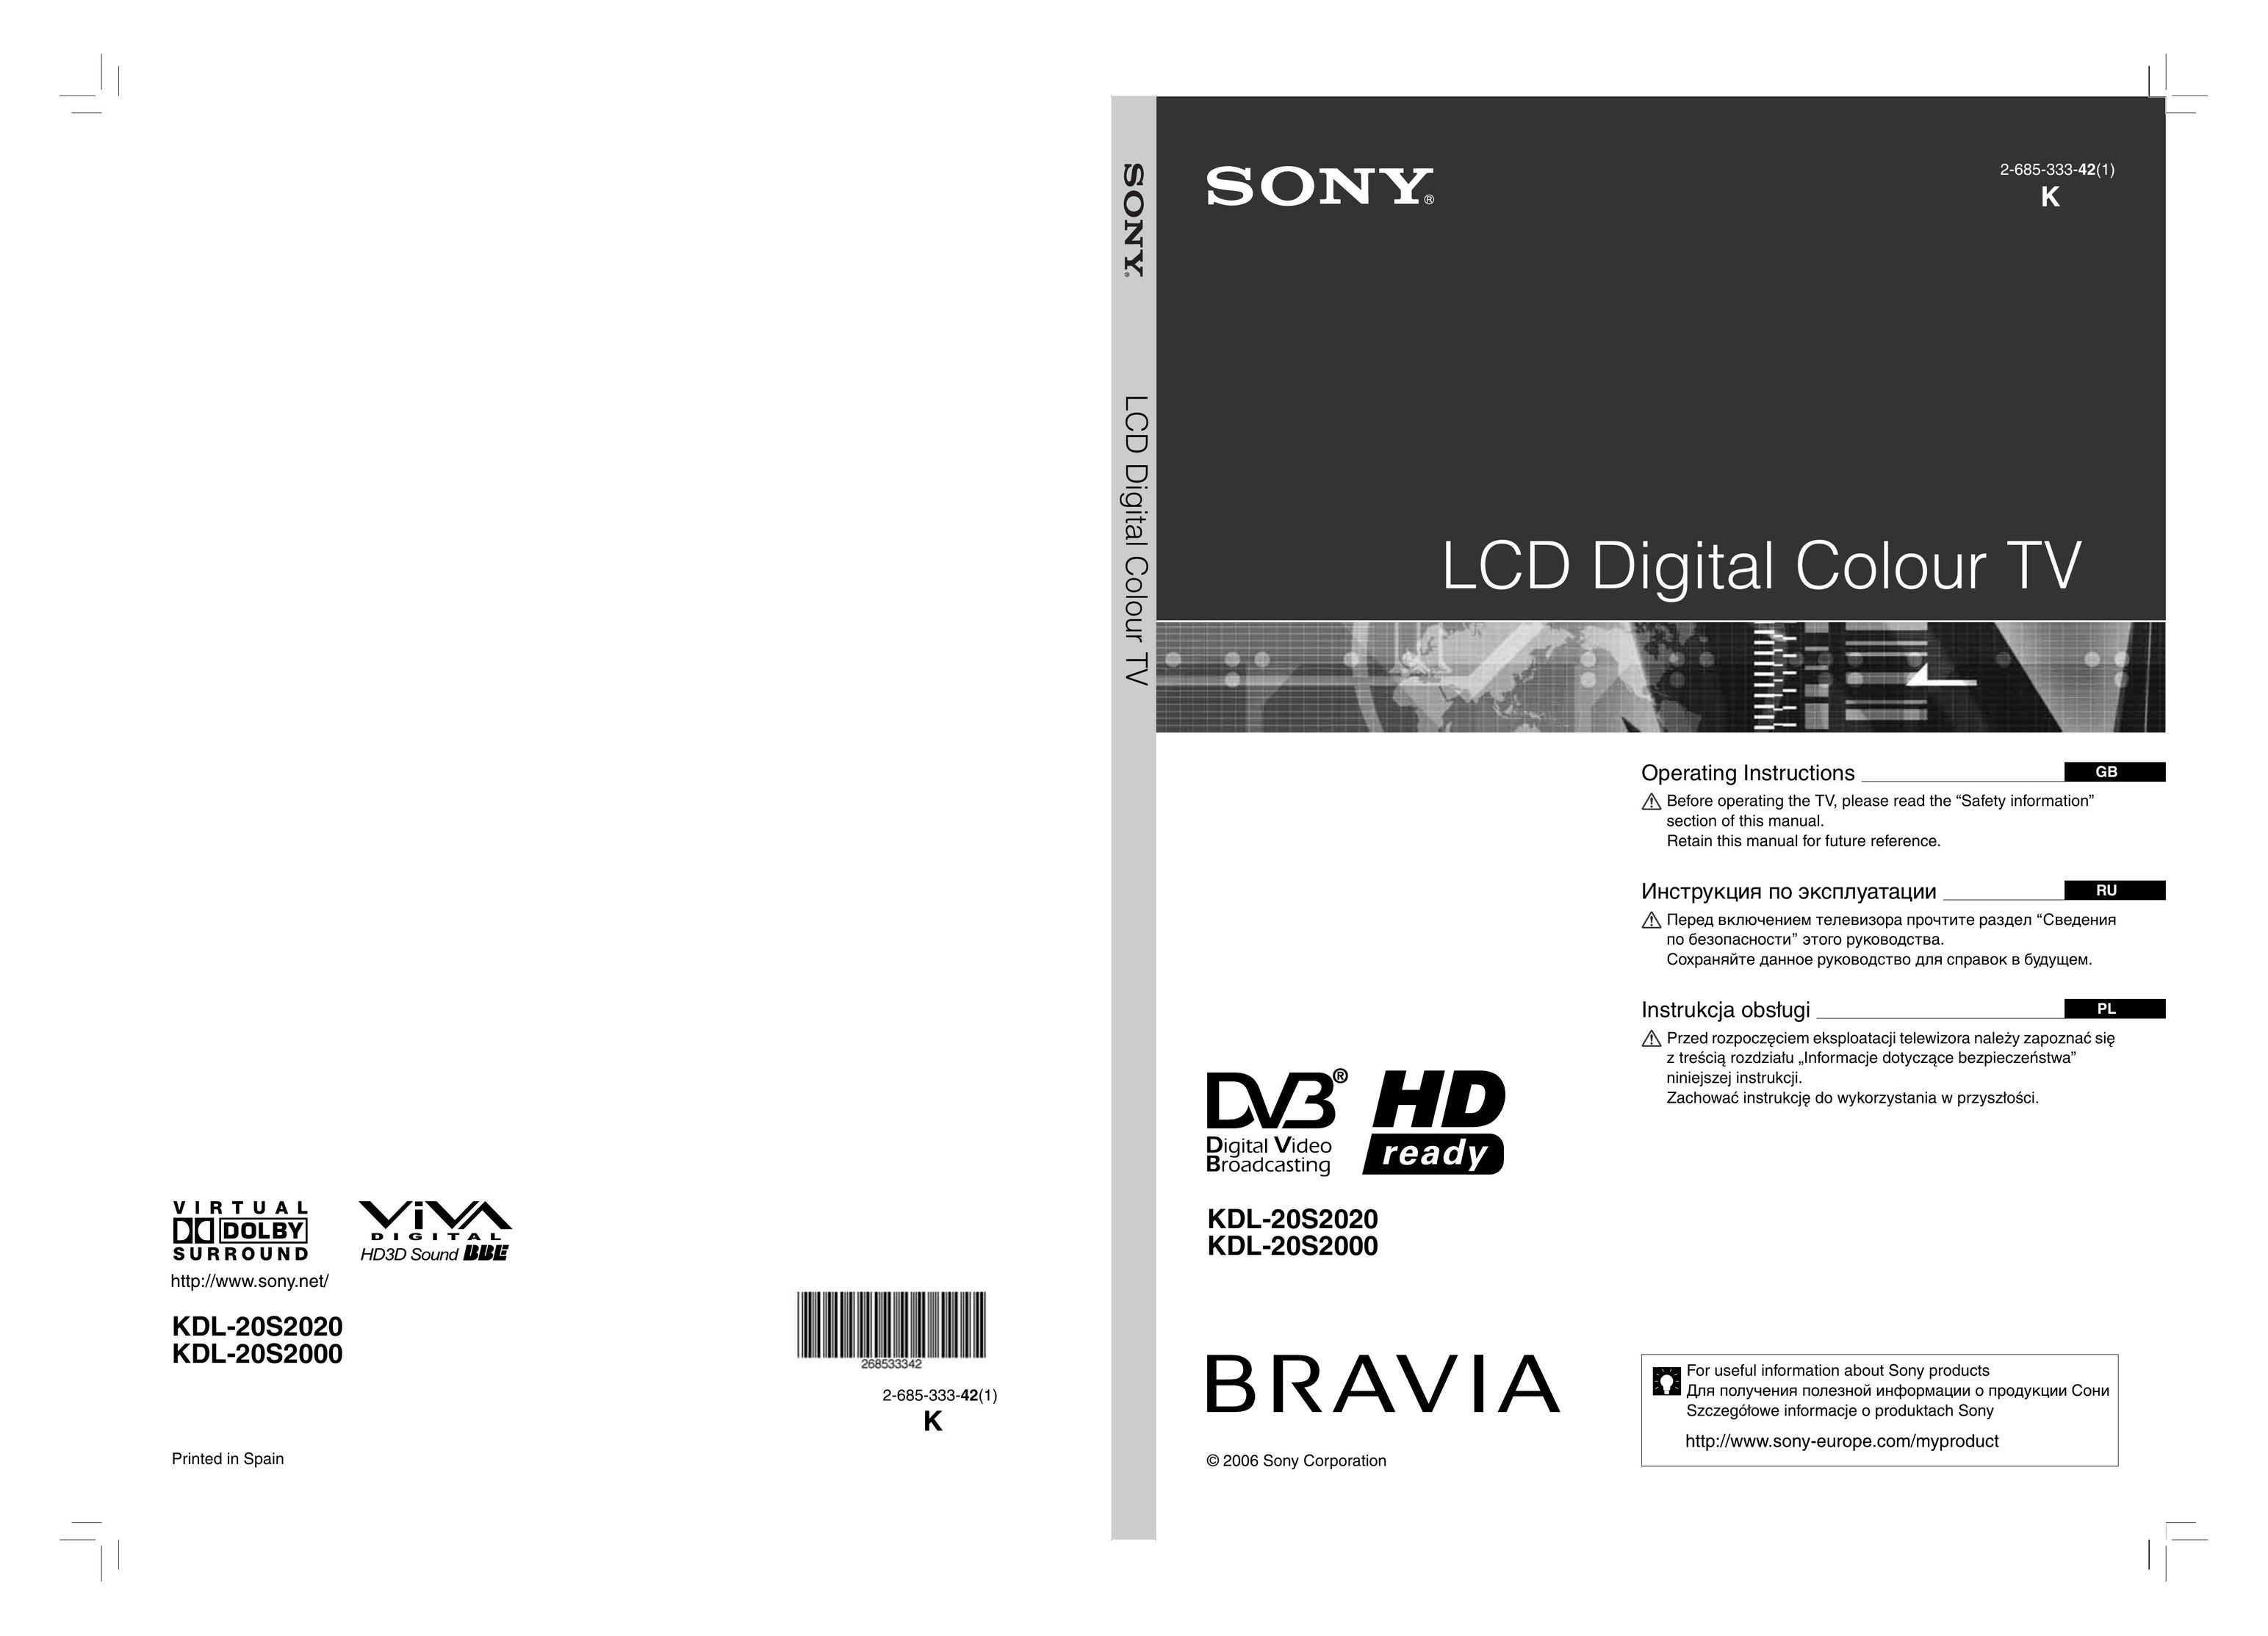 Sony KDL-20S2000 Barcode Reader User Manual